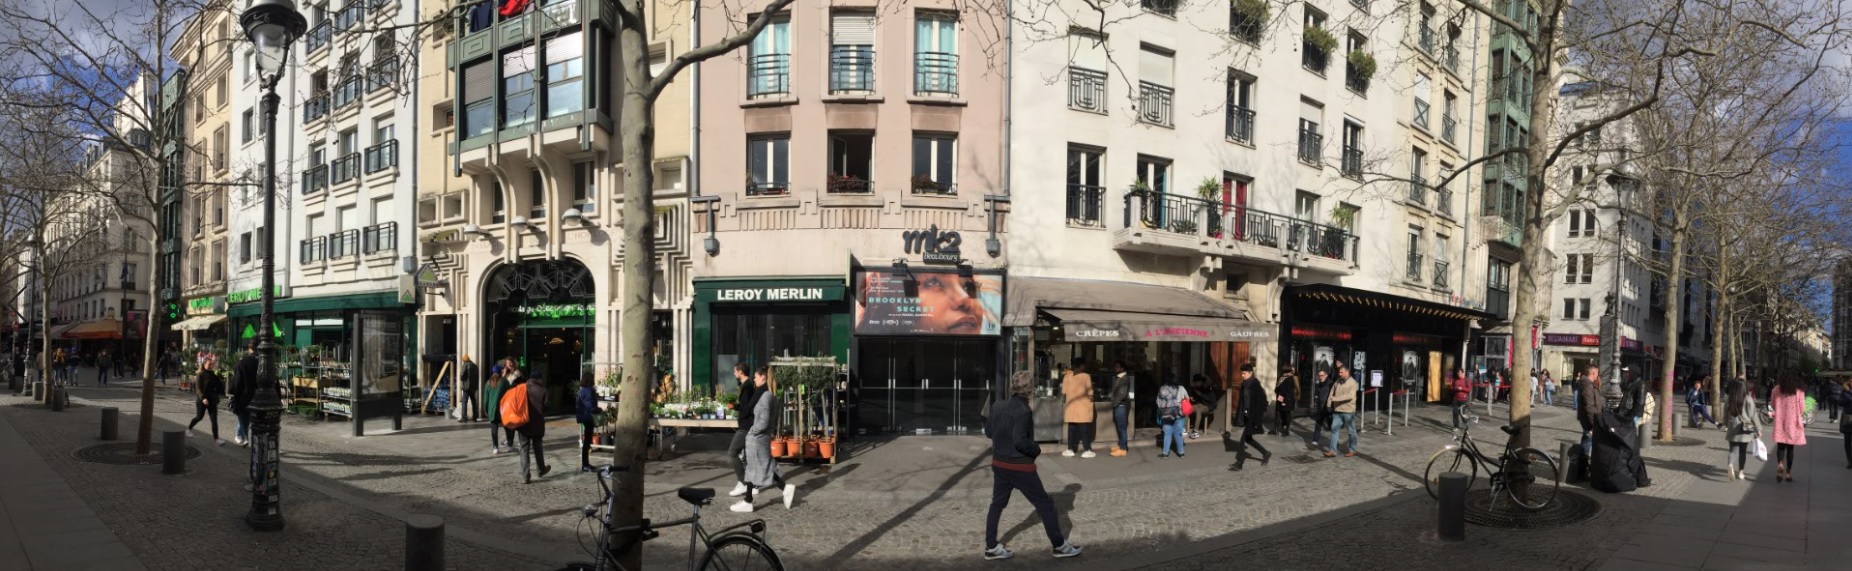 The Quartier de l'Horloge in Paris. A central district built in the beginning of 1980s combining shops, parking lots, social housing, condominiums and public buildings.